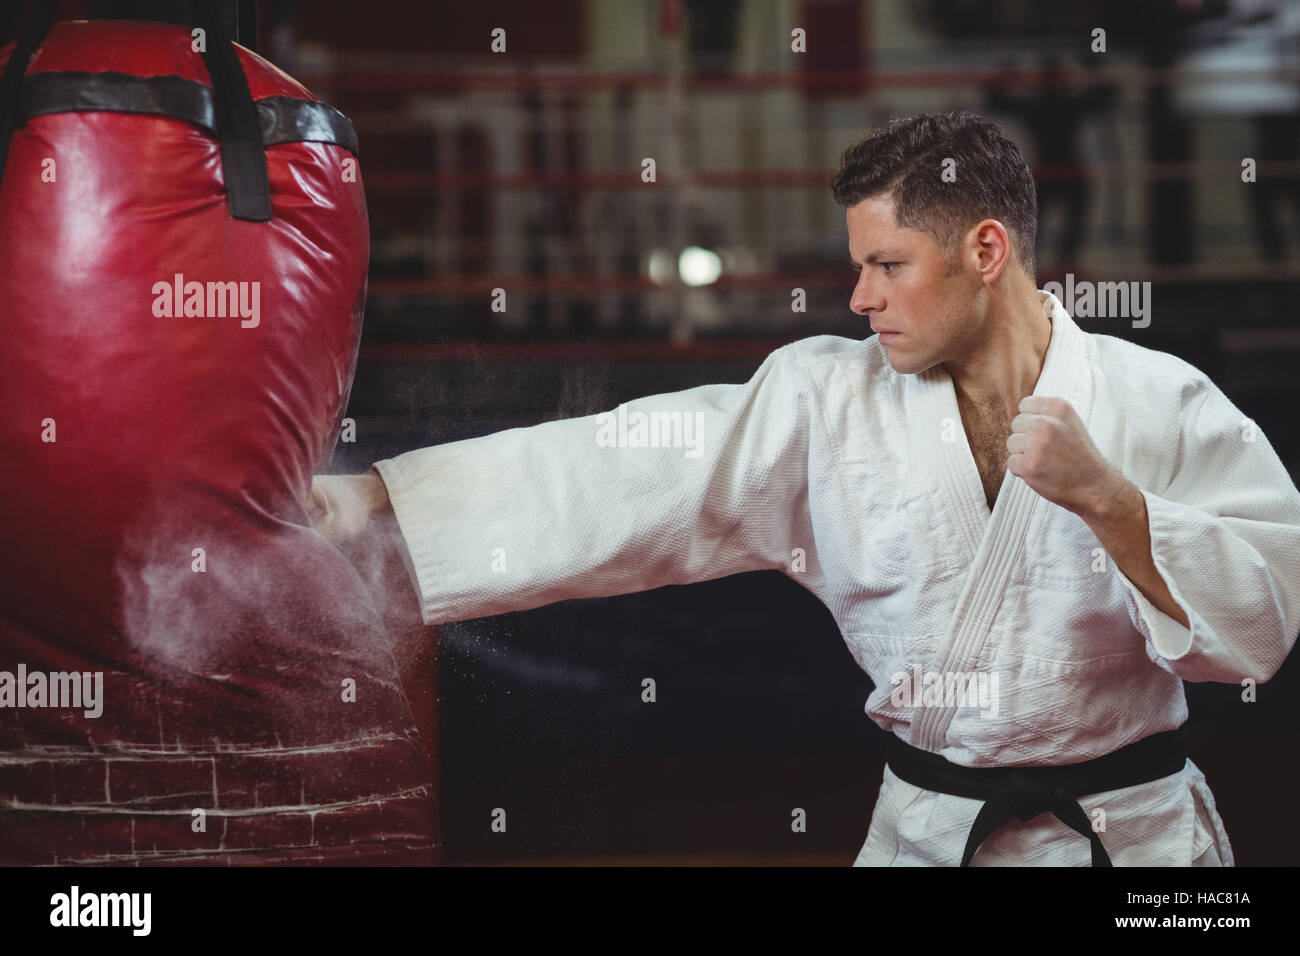 Karate player practicing karate with punching bag Stock Photo